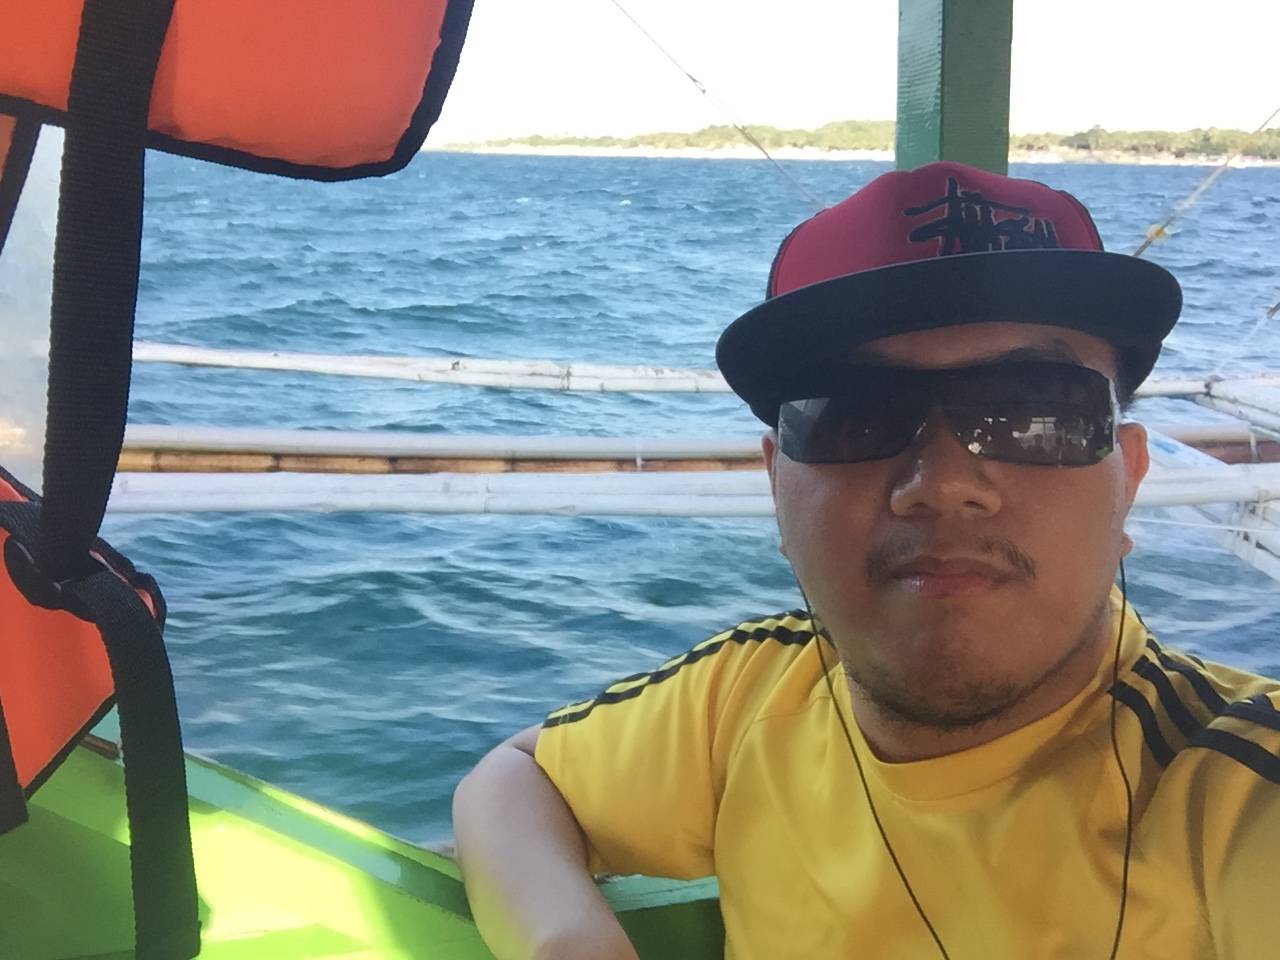 Riding a pump boat to Boracay